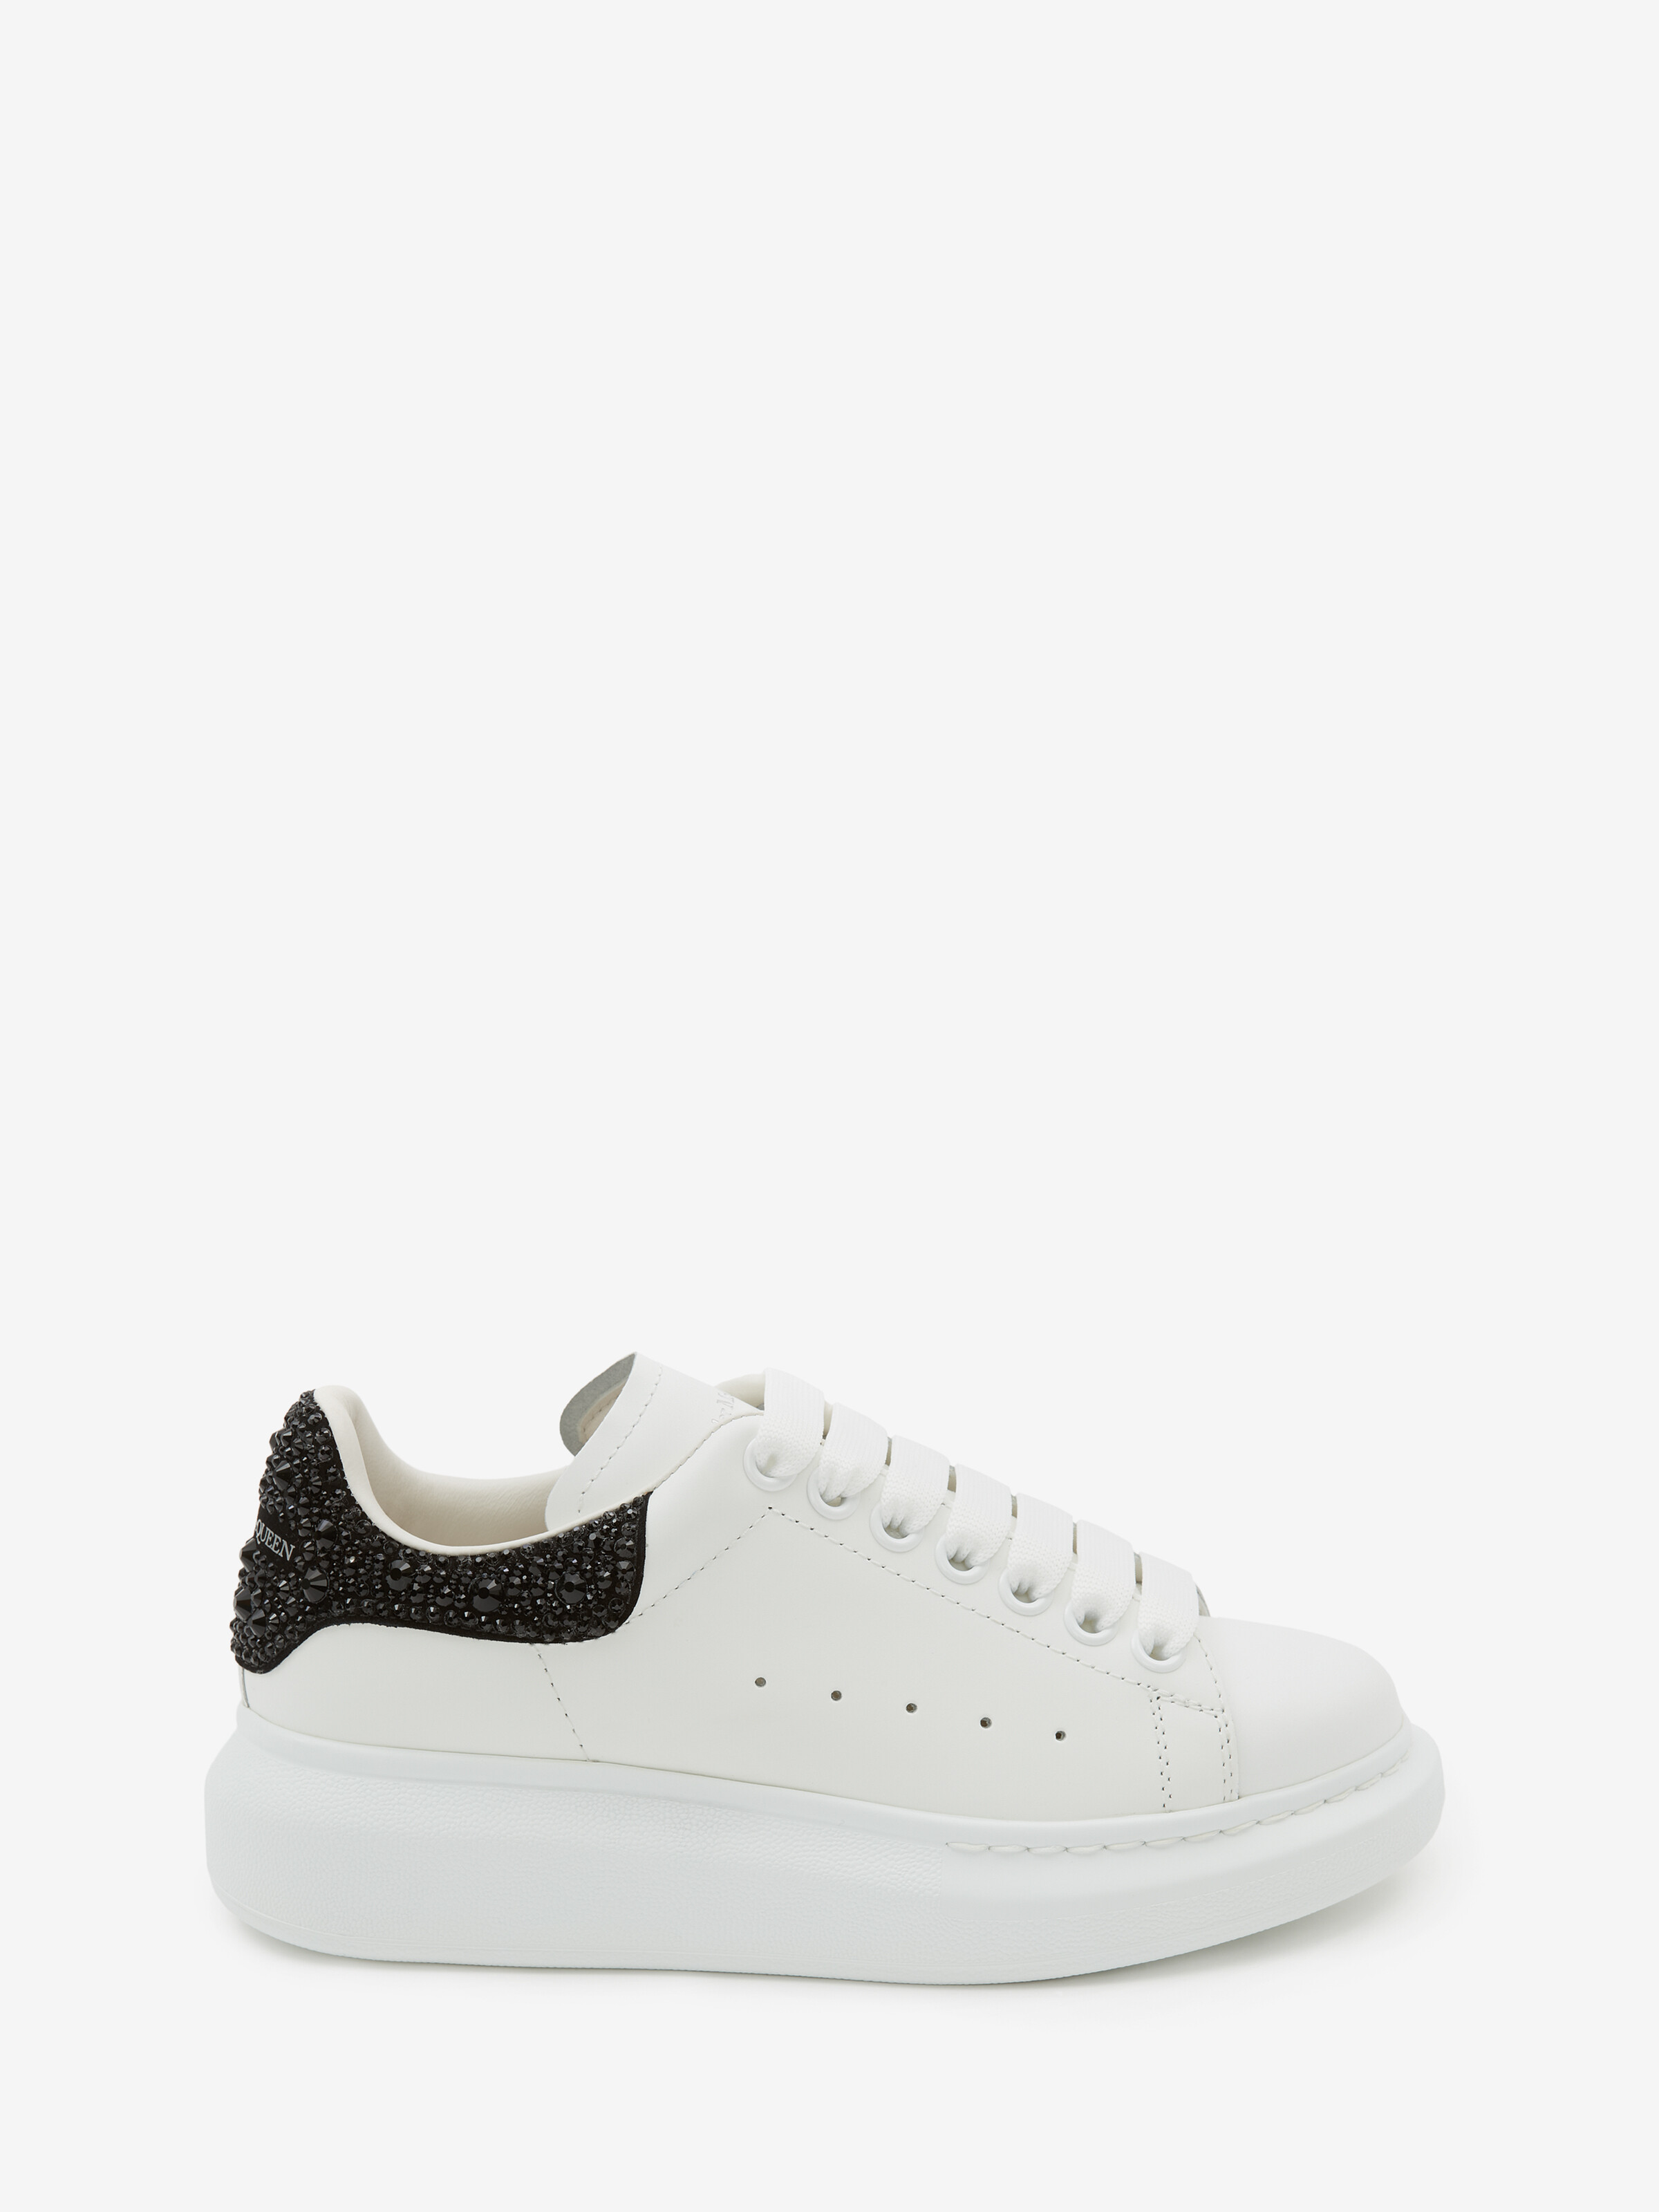 Alexander Mcqueen Oversized Sneaker In White/black